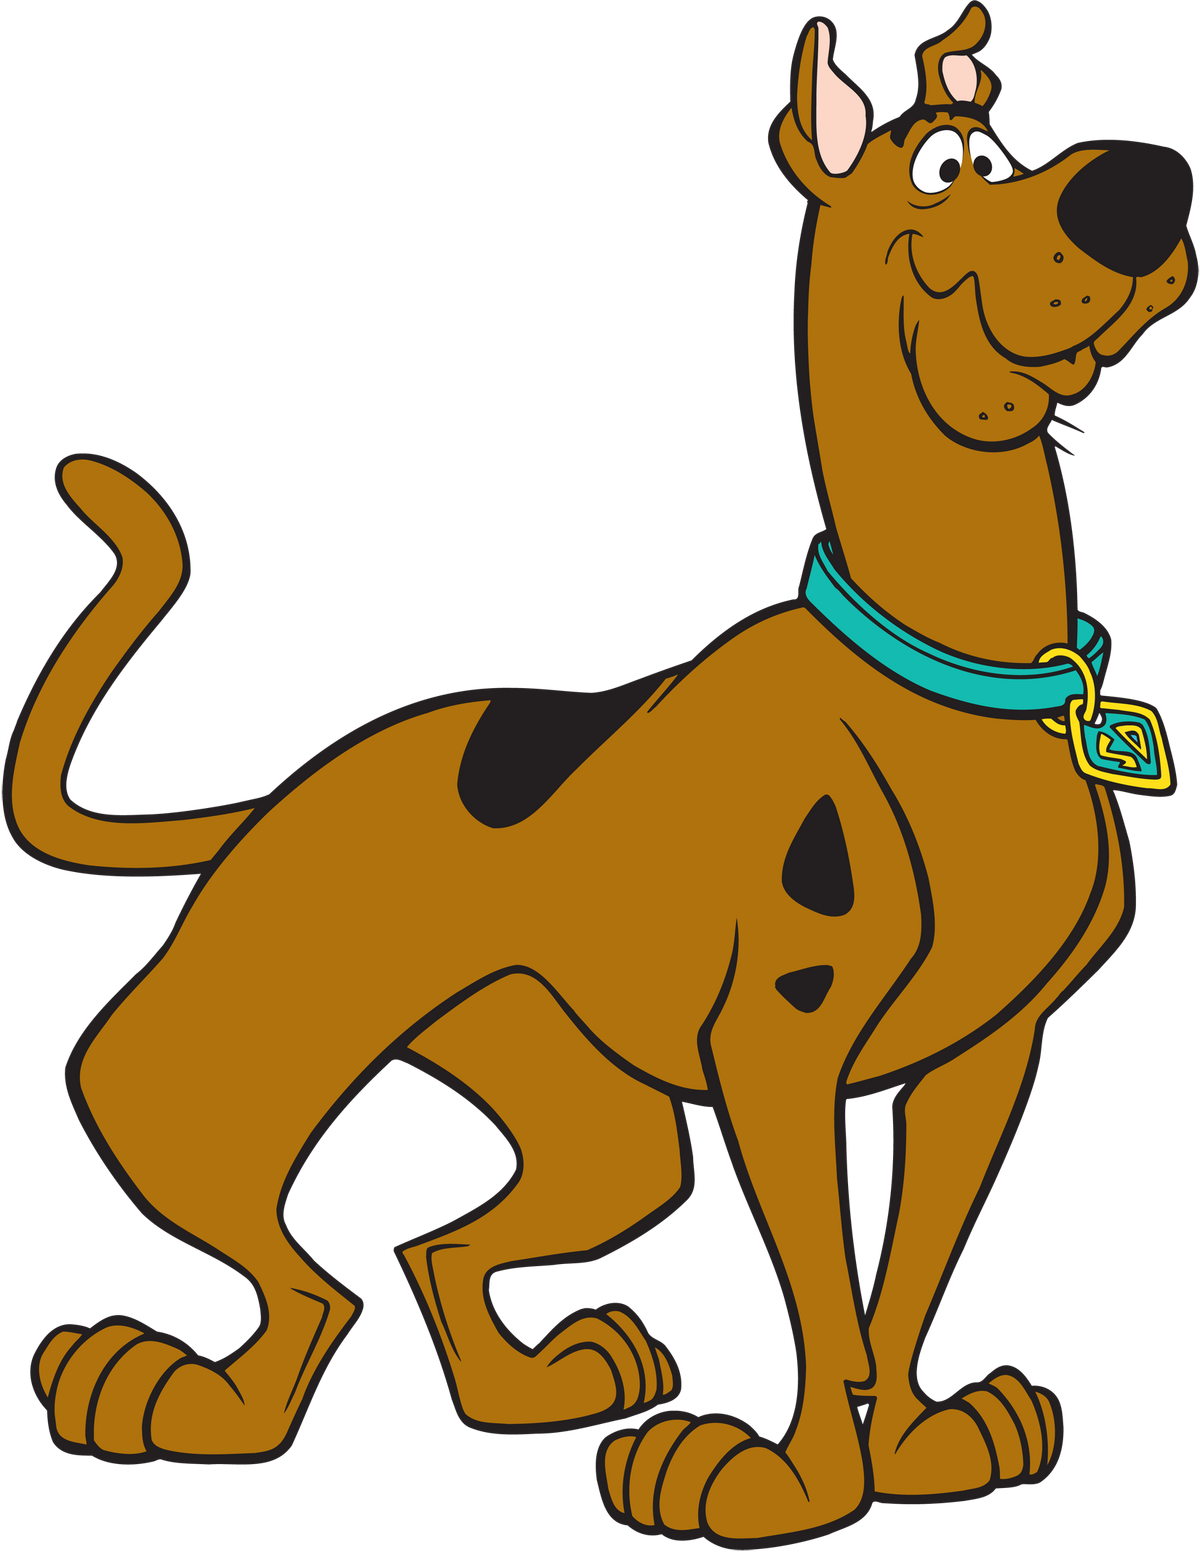 Scooby-Doo from Scooby-Doo